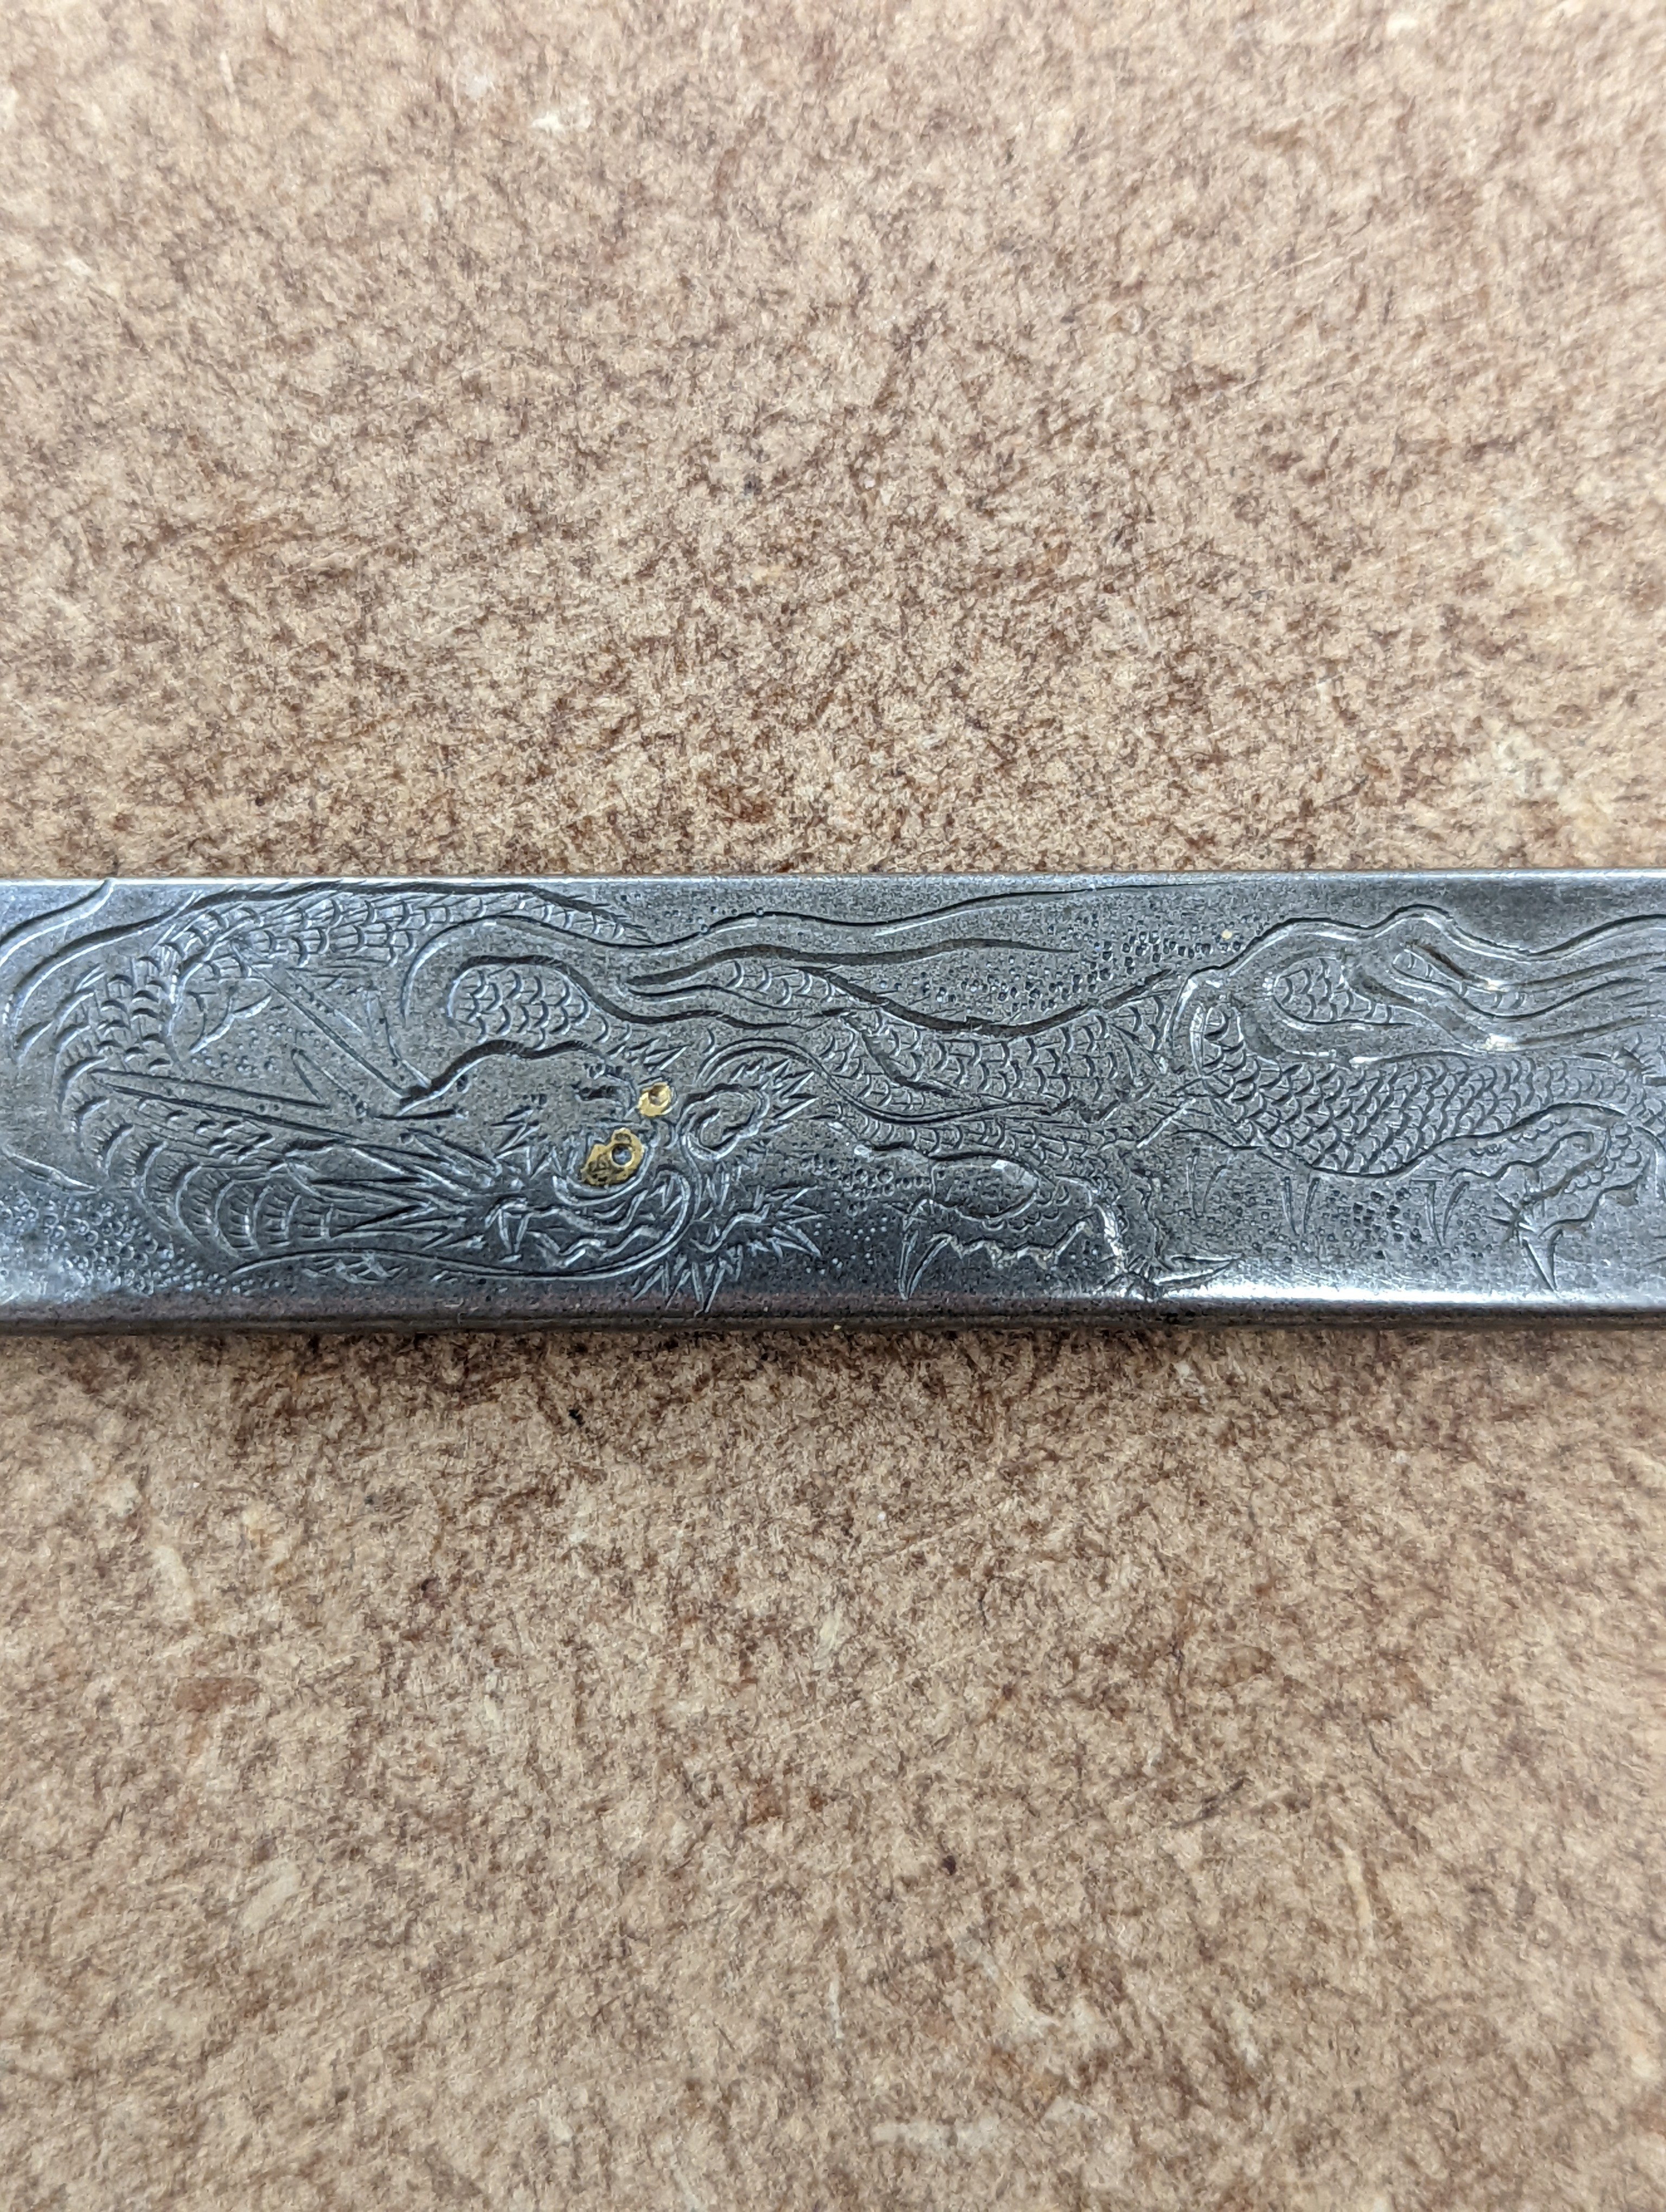 A Japanese mixed metal ‘dragon’ kozuka handle, 19th century, boxed